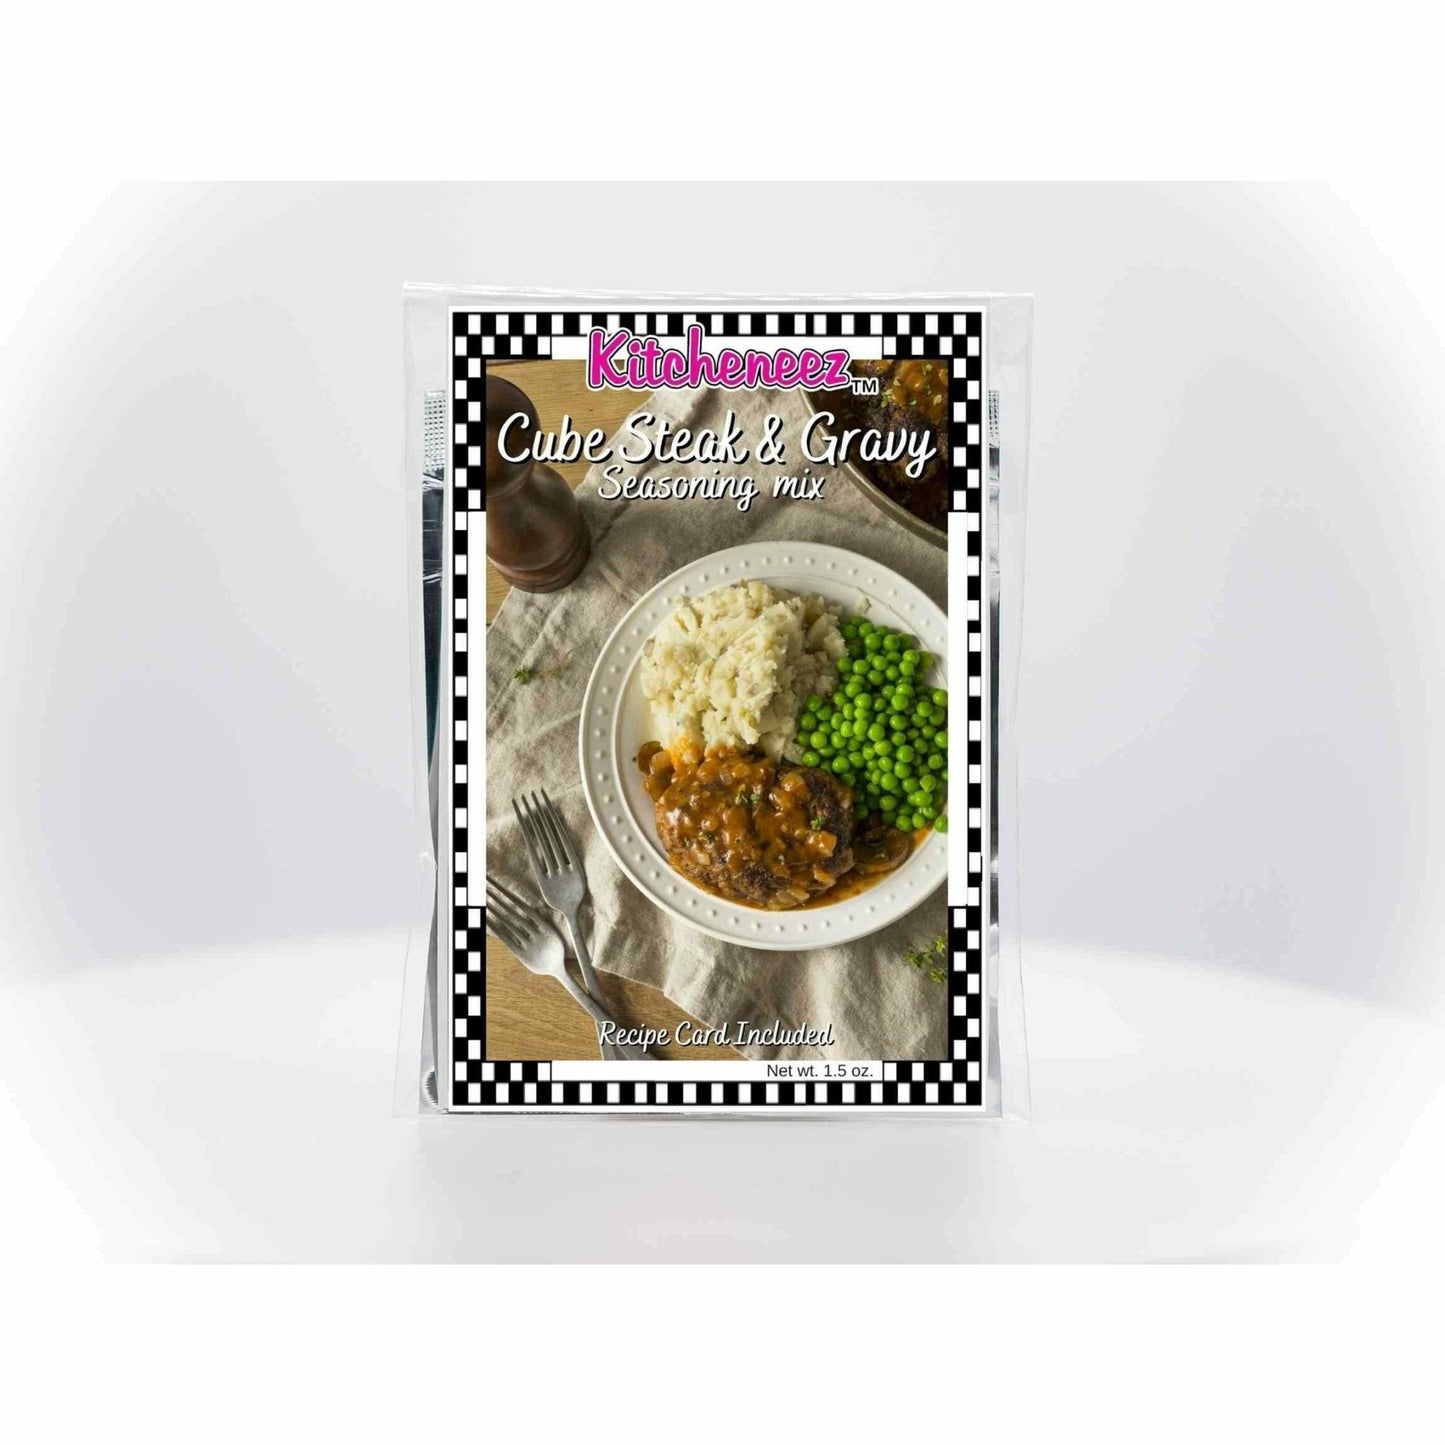 PRE-ORDER Cube Steak & Gravy mix - Kitcheneez Mixes & More!